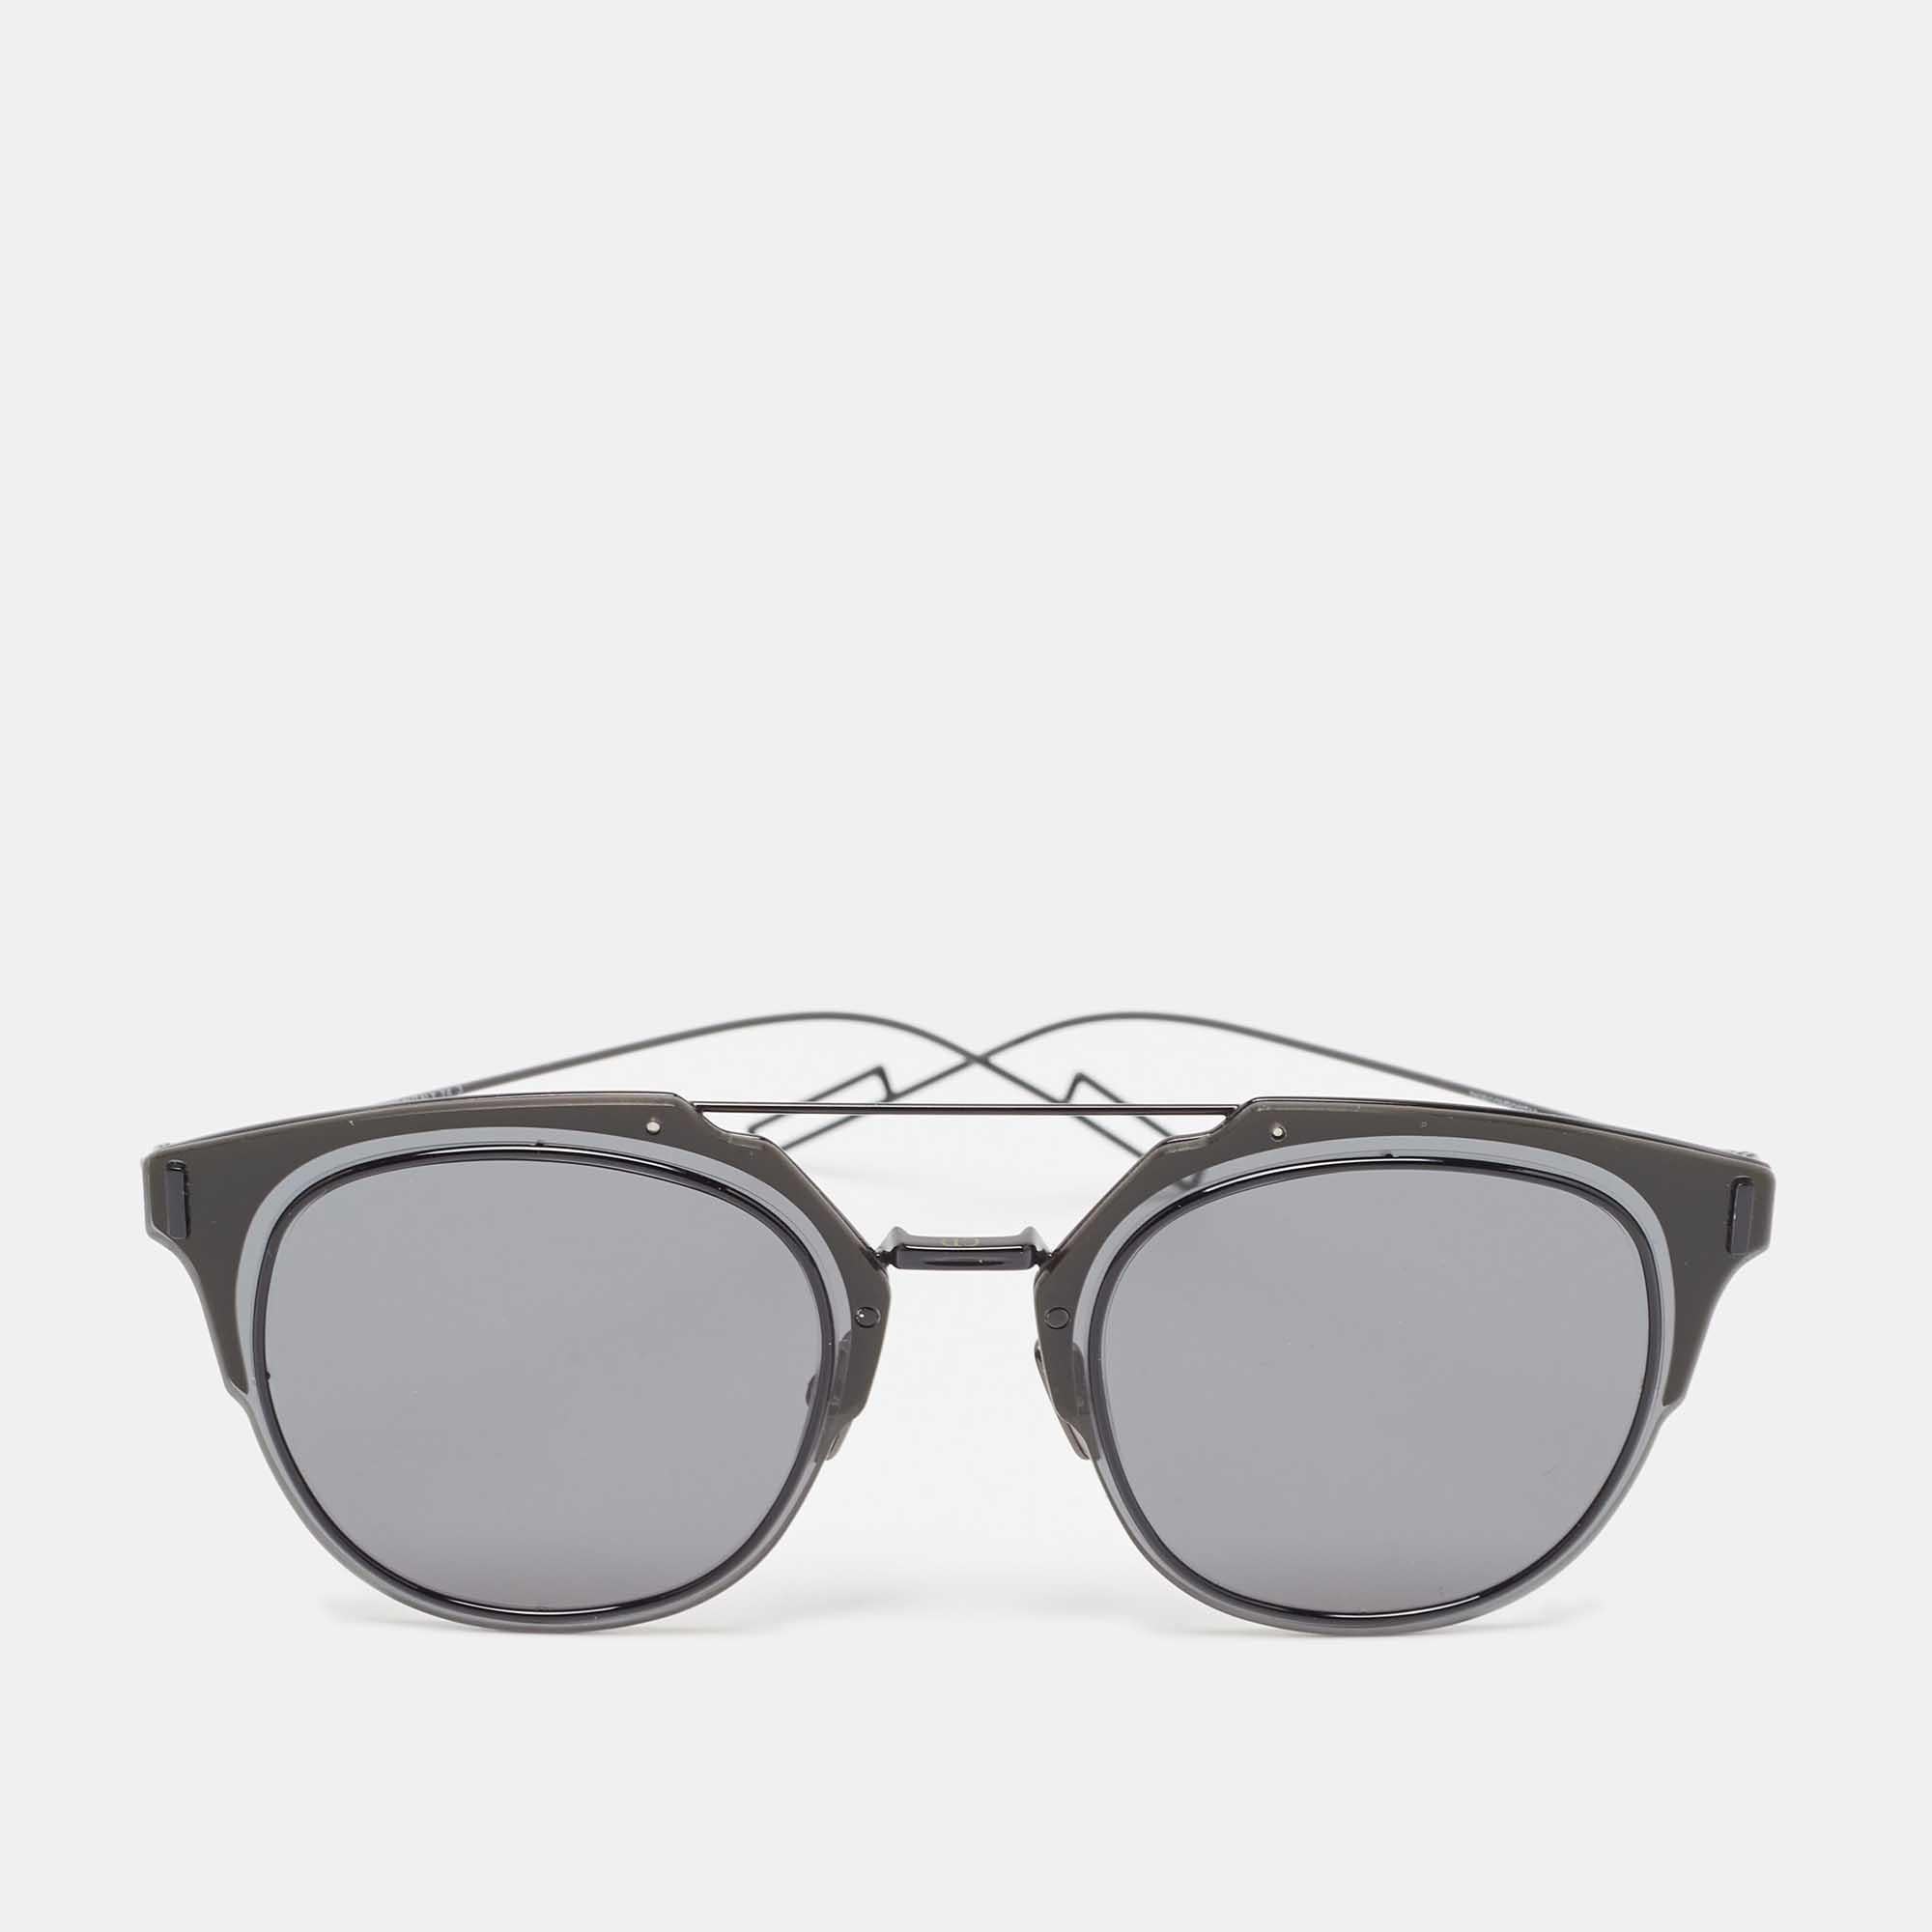 Dior Homme Black Composit 1.0 Wayfarer Sunglasses In Good Condition For Sale In Dubai, Al Qouz 2